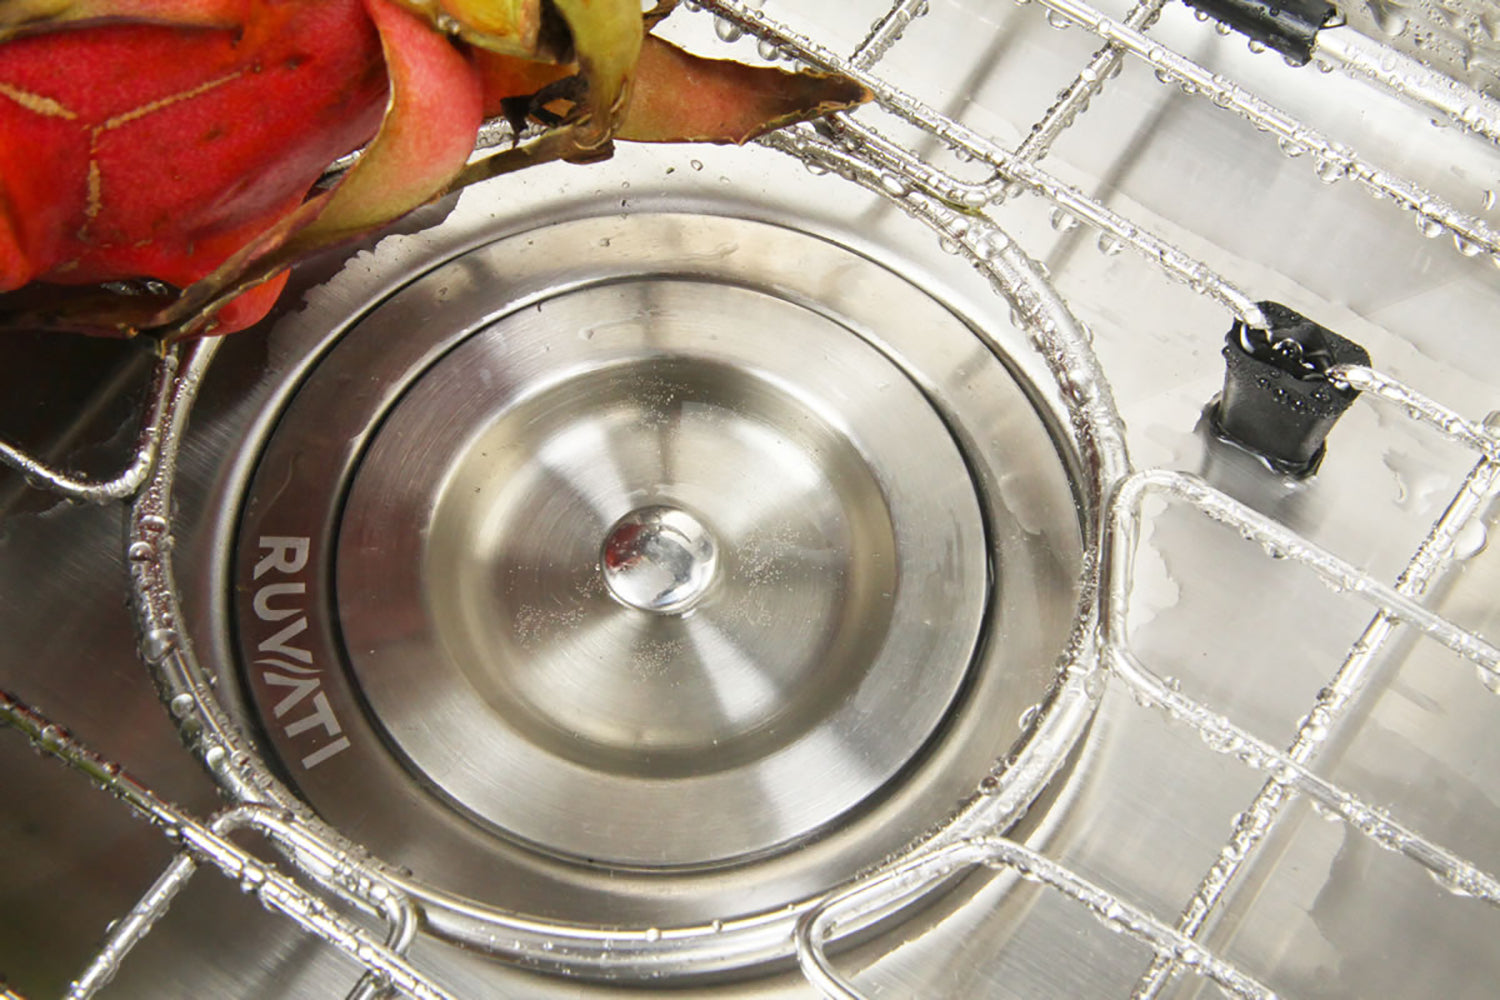 Ruvati Low-Divide Undermount Tight Radius 50/50 Double Bowl 16 Gauge Stainless Steel Kitchen Sink